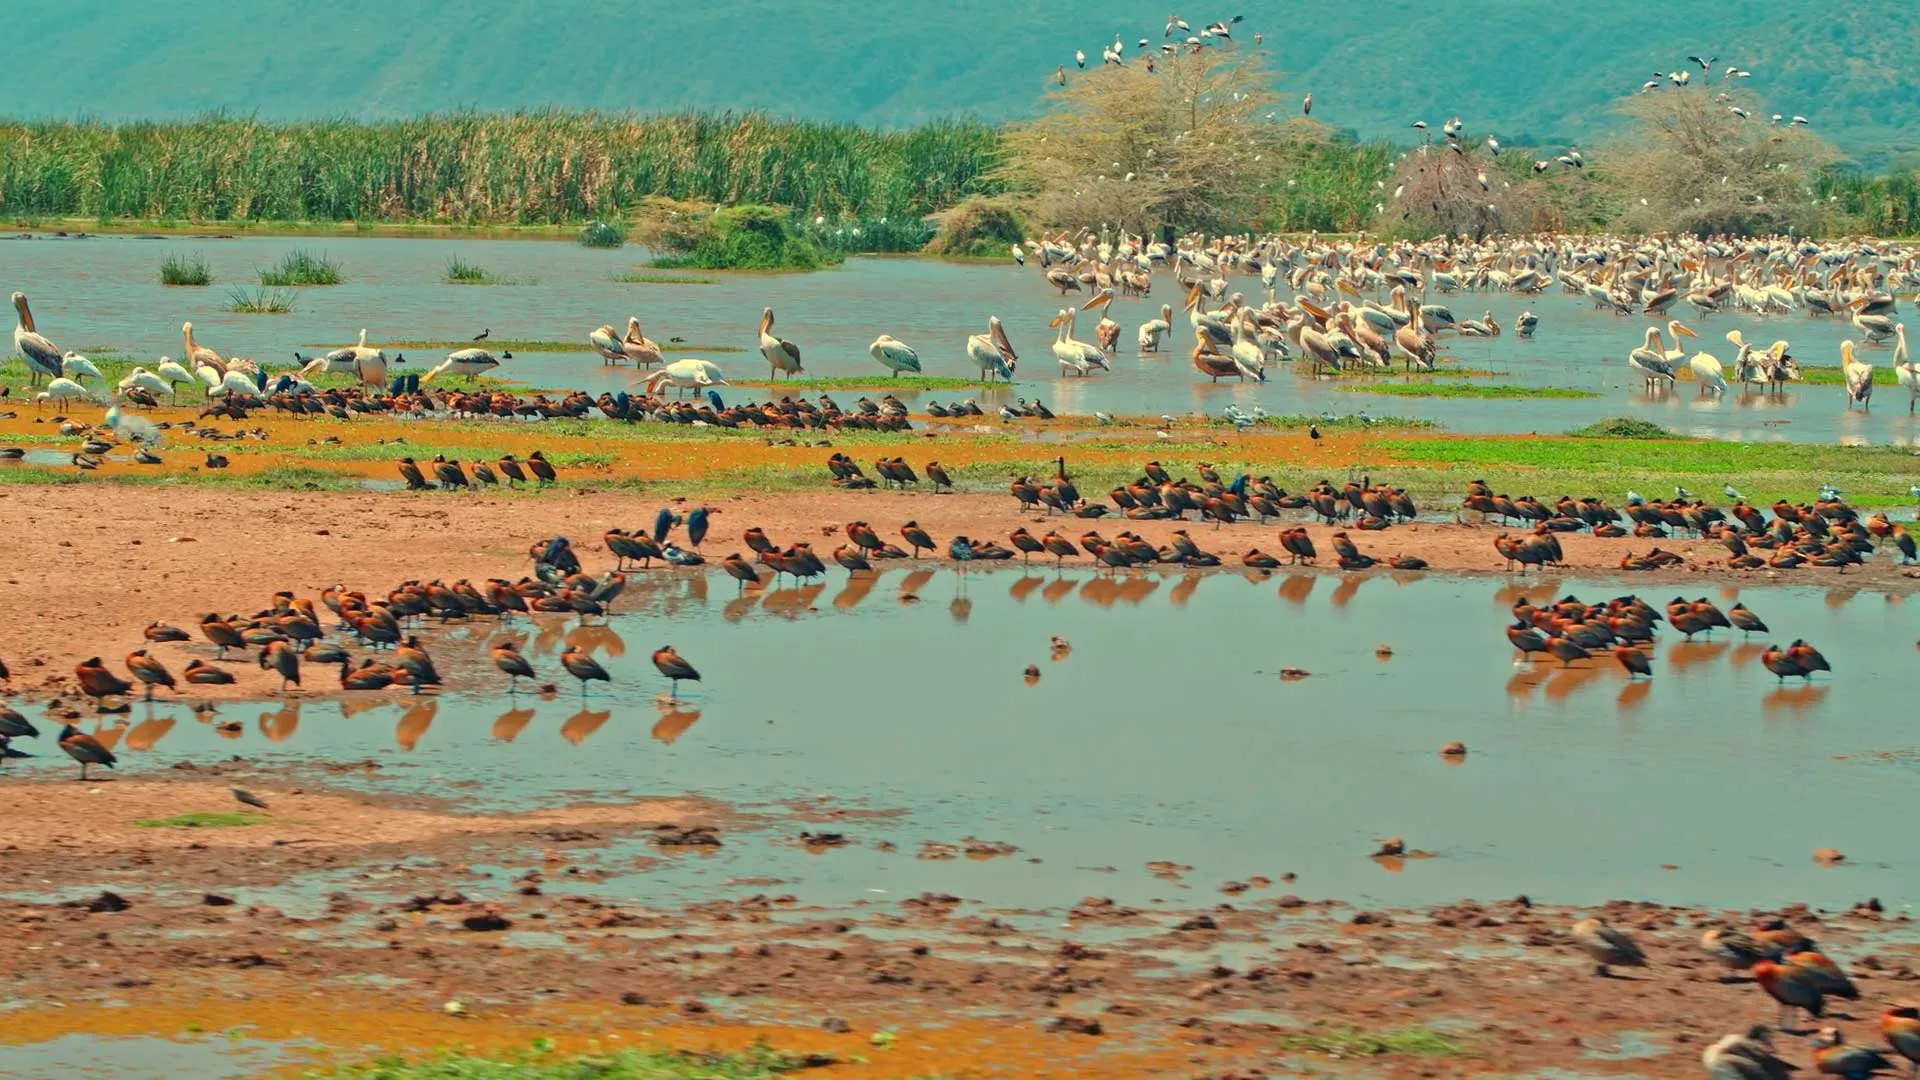 Lake Manyara in Tanzania, Africa | Lakes - Rated 0.8